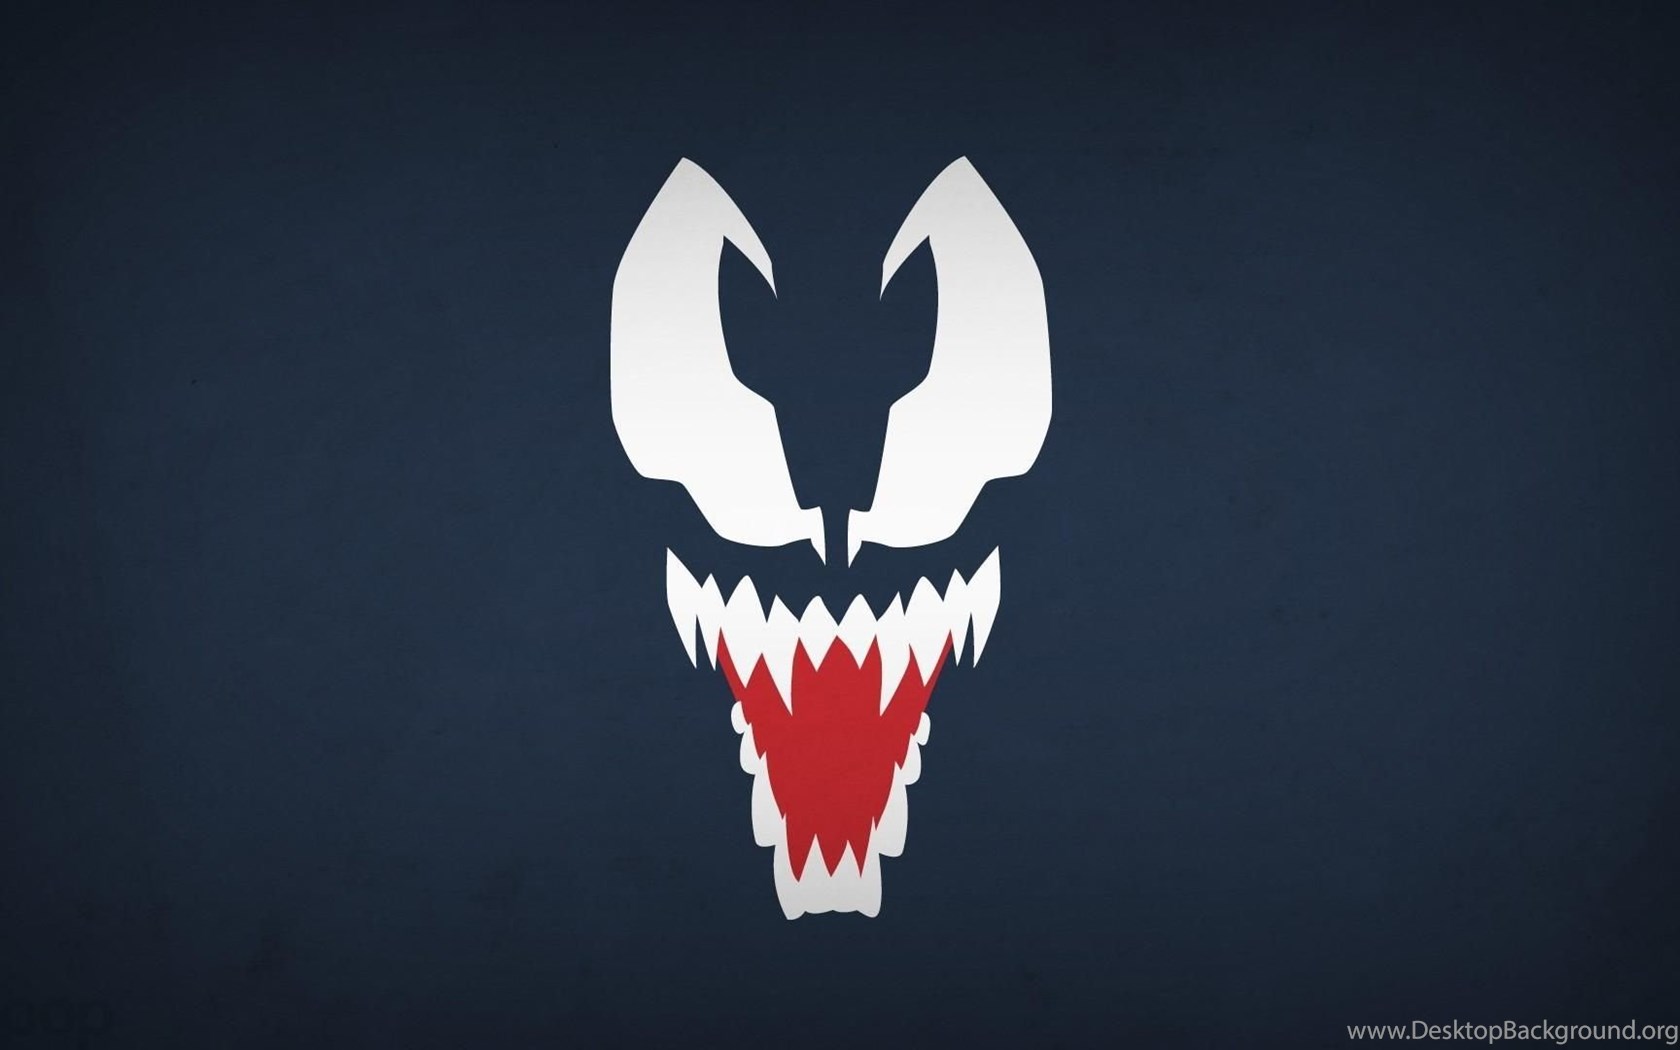 Venom Marvel Comics Navy Blue Background Villians Blo0p Wallpaper. Desktop Background